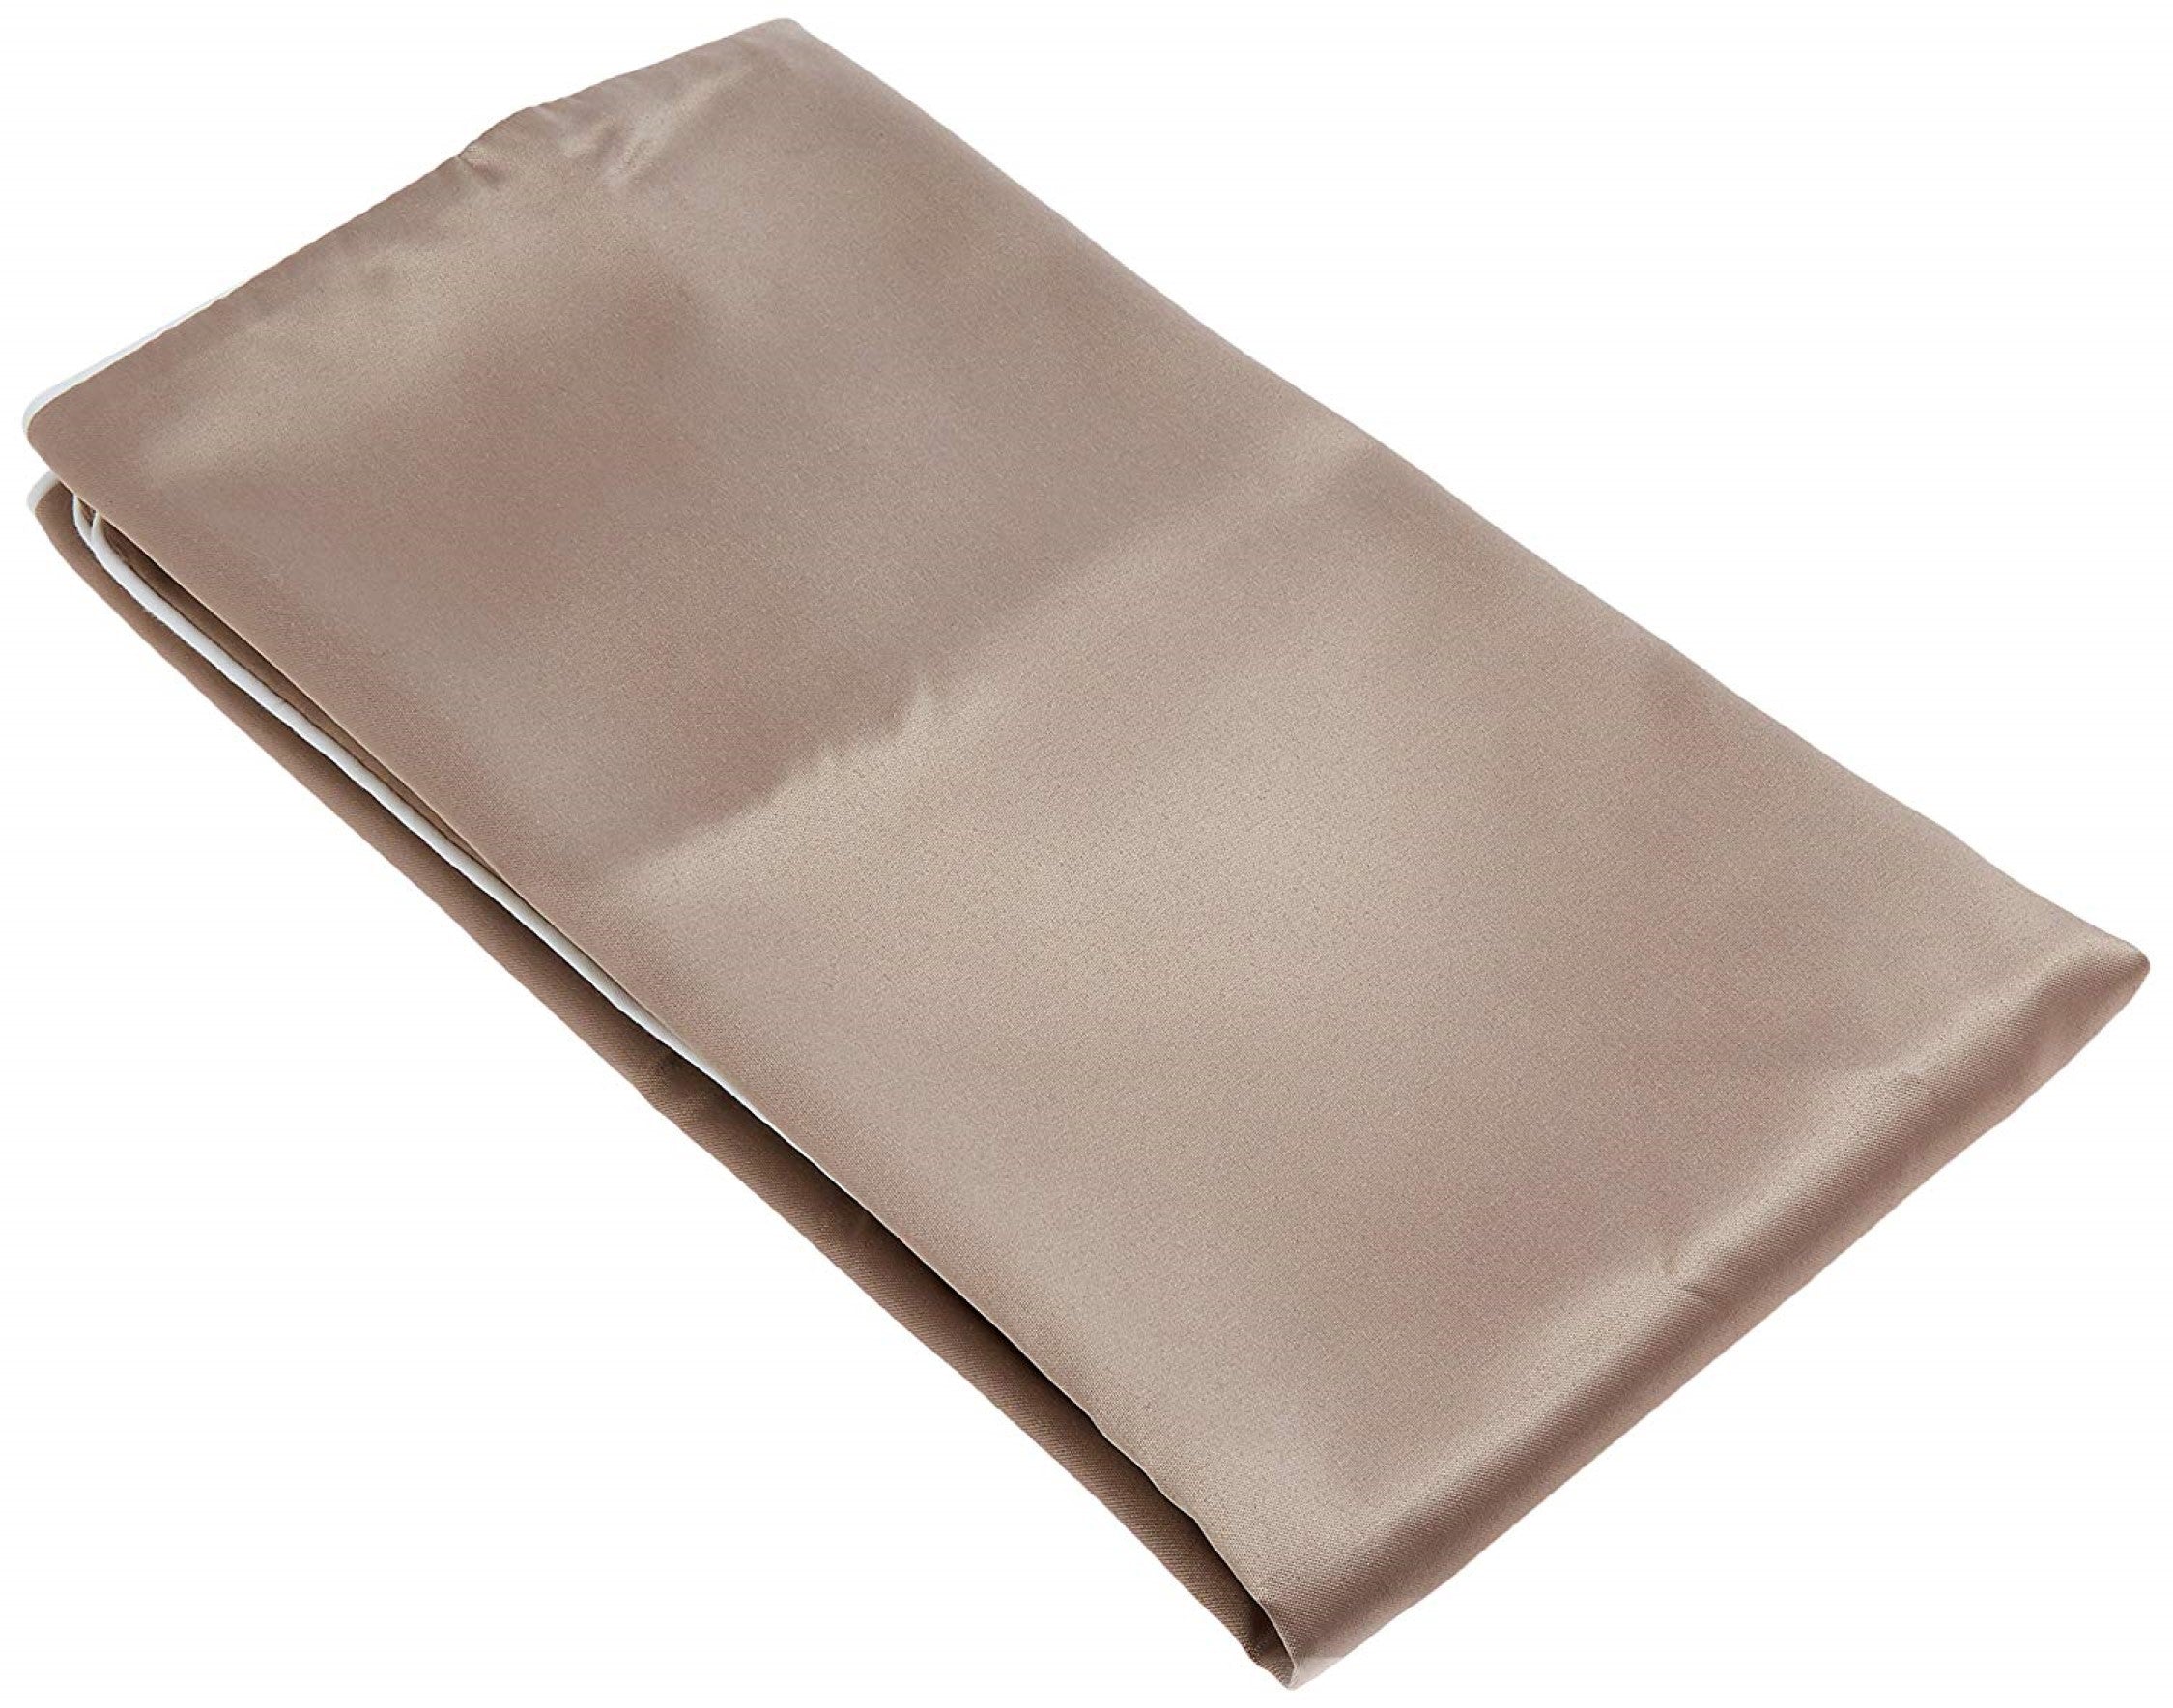 Iluminage Skin Rejuvenating Pillowcase with Anti-Aging Copper Technology